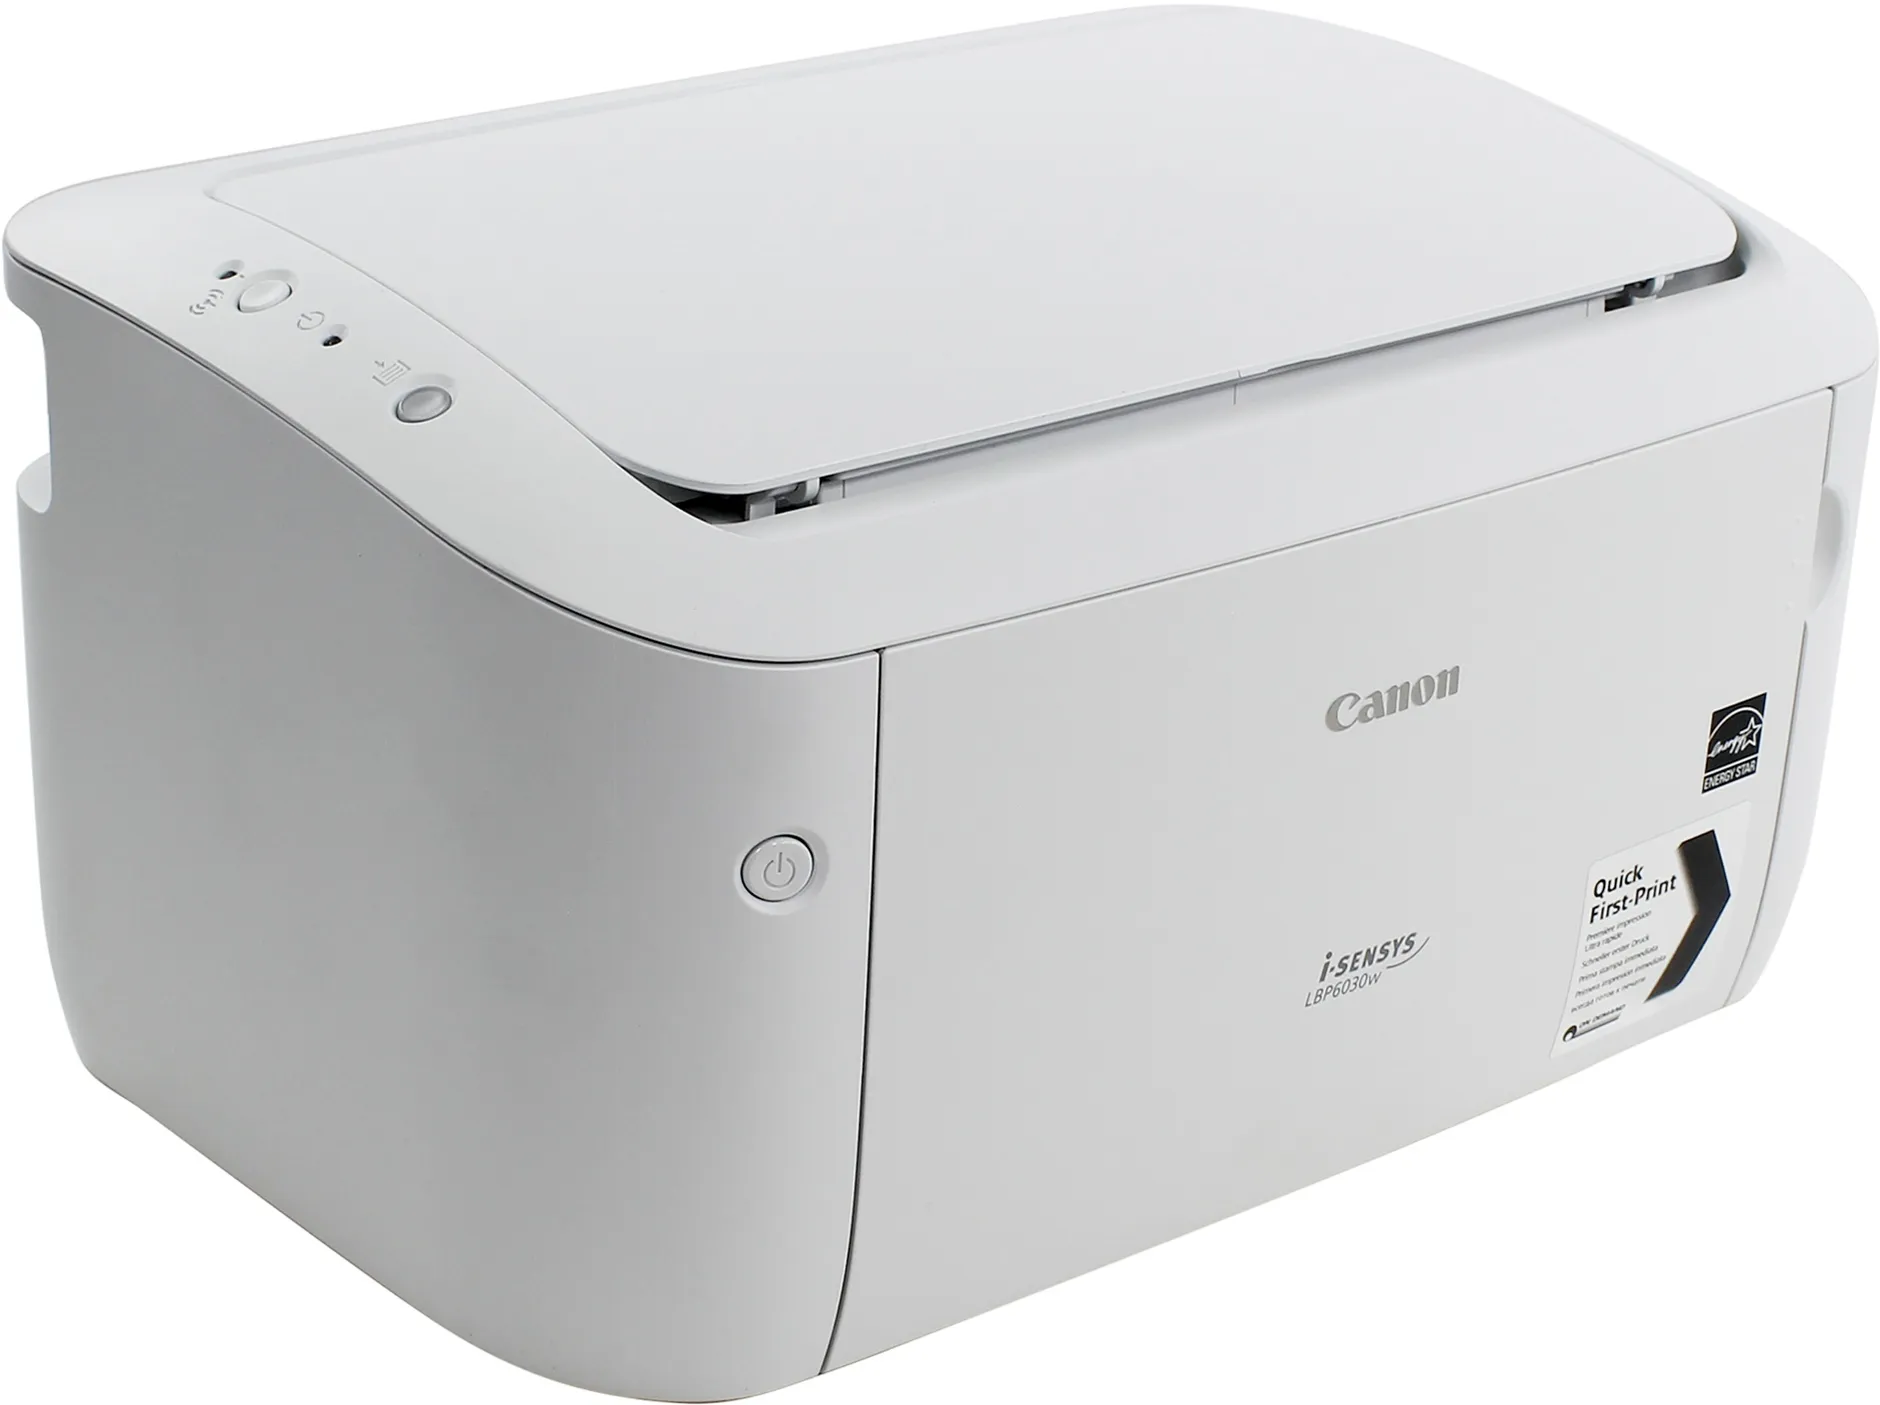 Принтер Canon i-SENSYS LBP6030w (A4, 18 стр / мин, 32Mb, 2400dpi, USB2.0, WiFi, лазерный)#2